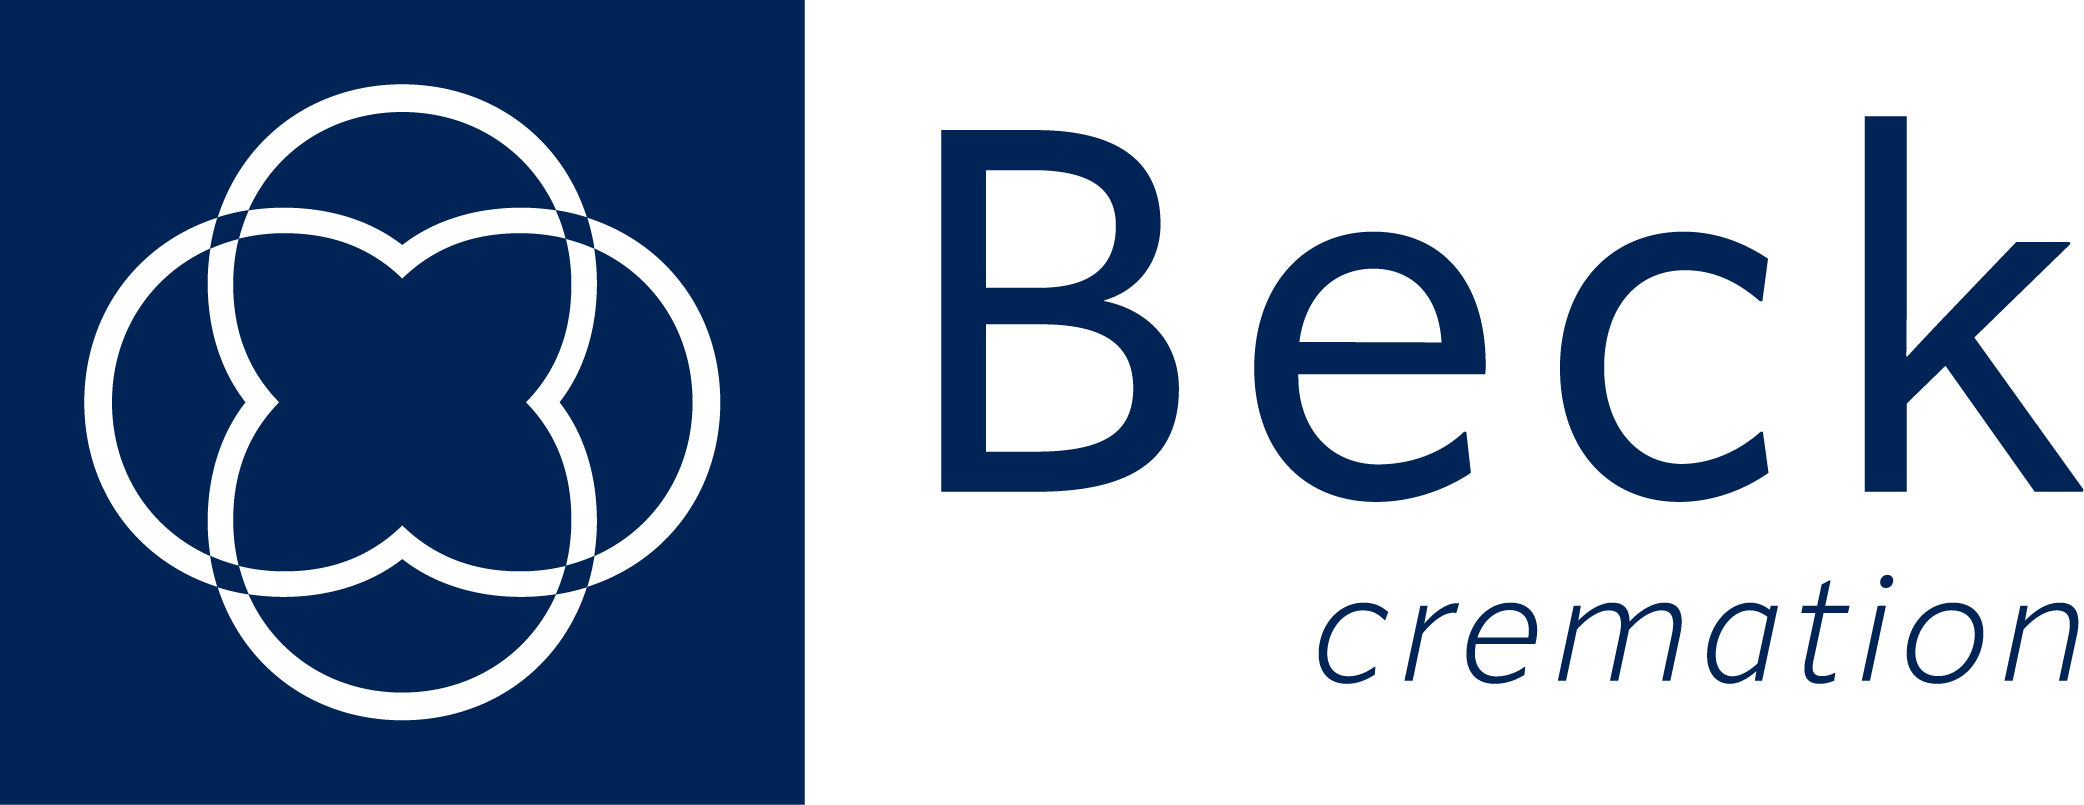 beck cremation logo